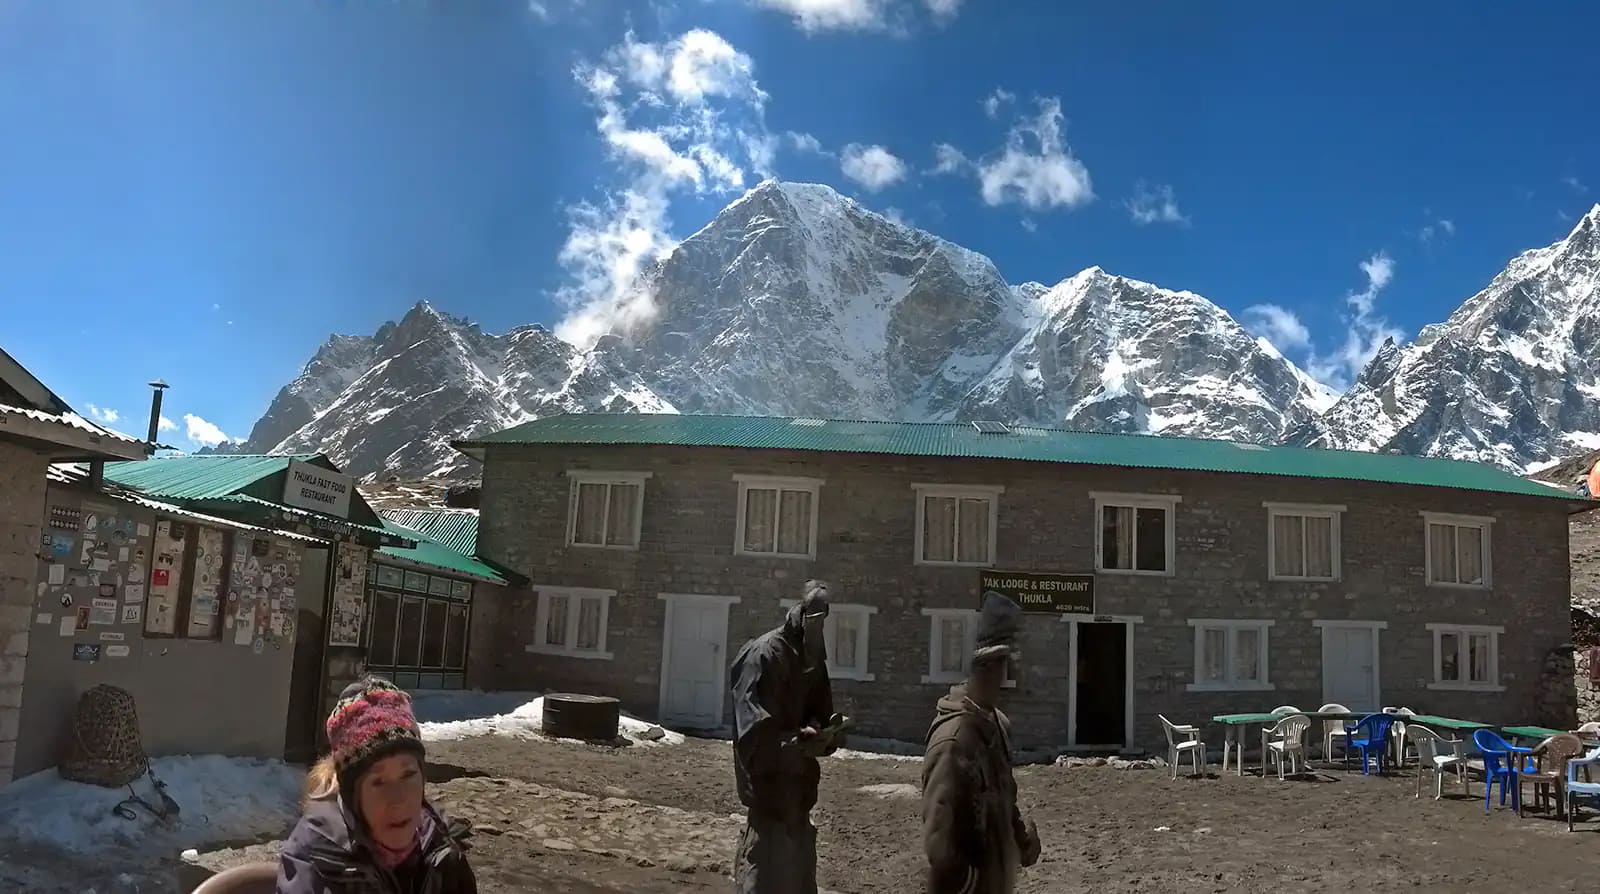 Lodge in Everest - Everest Base Camp Trek in March